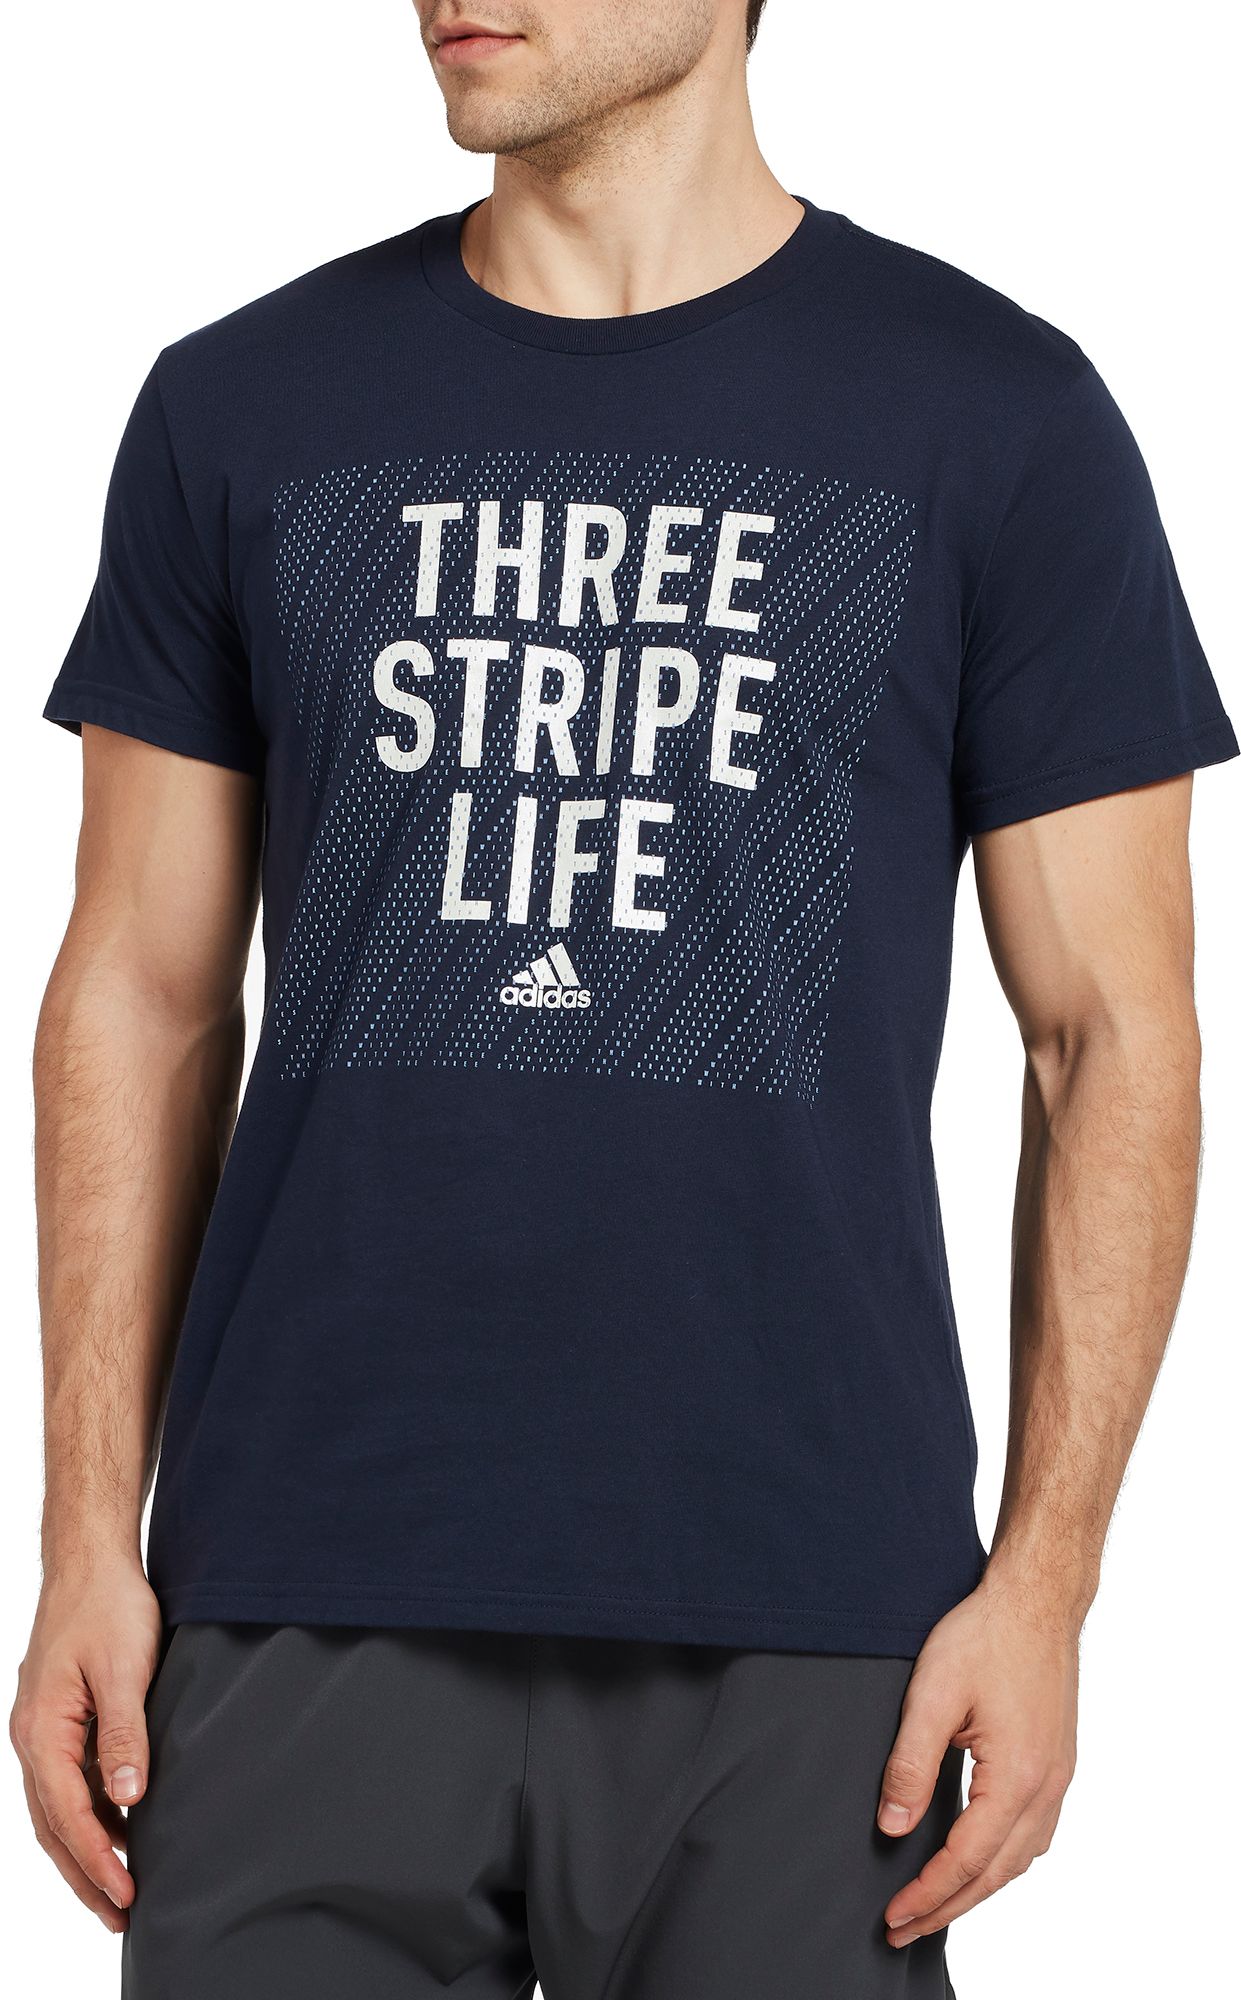 adidas Men's Three Stripe Life Graphic T-Shirt - .97